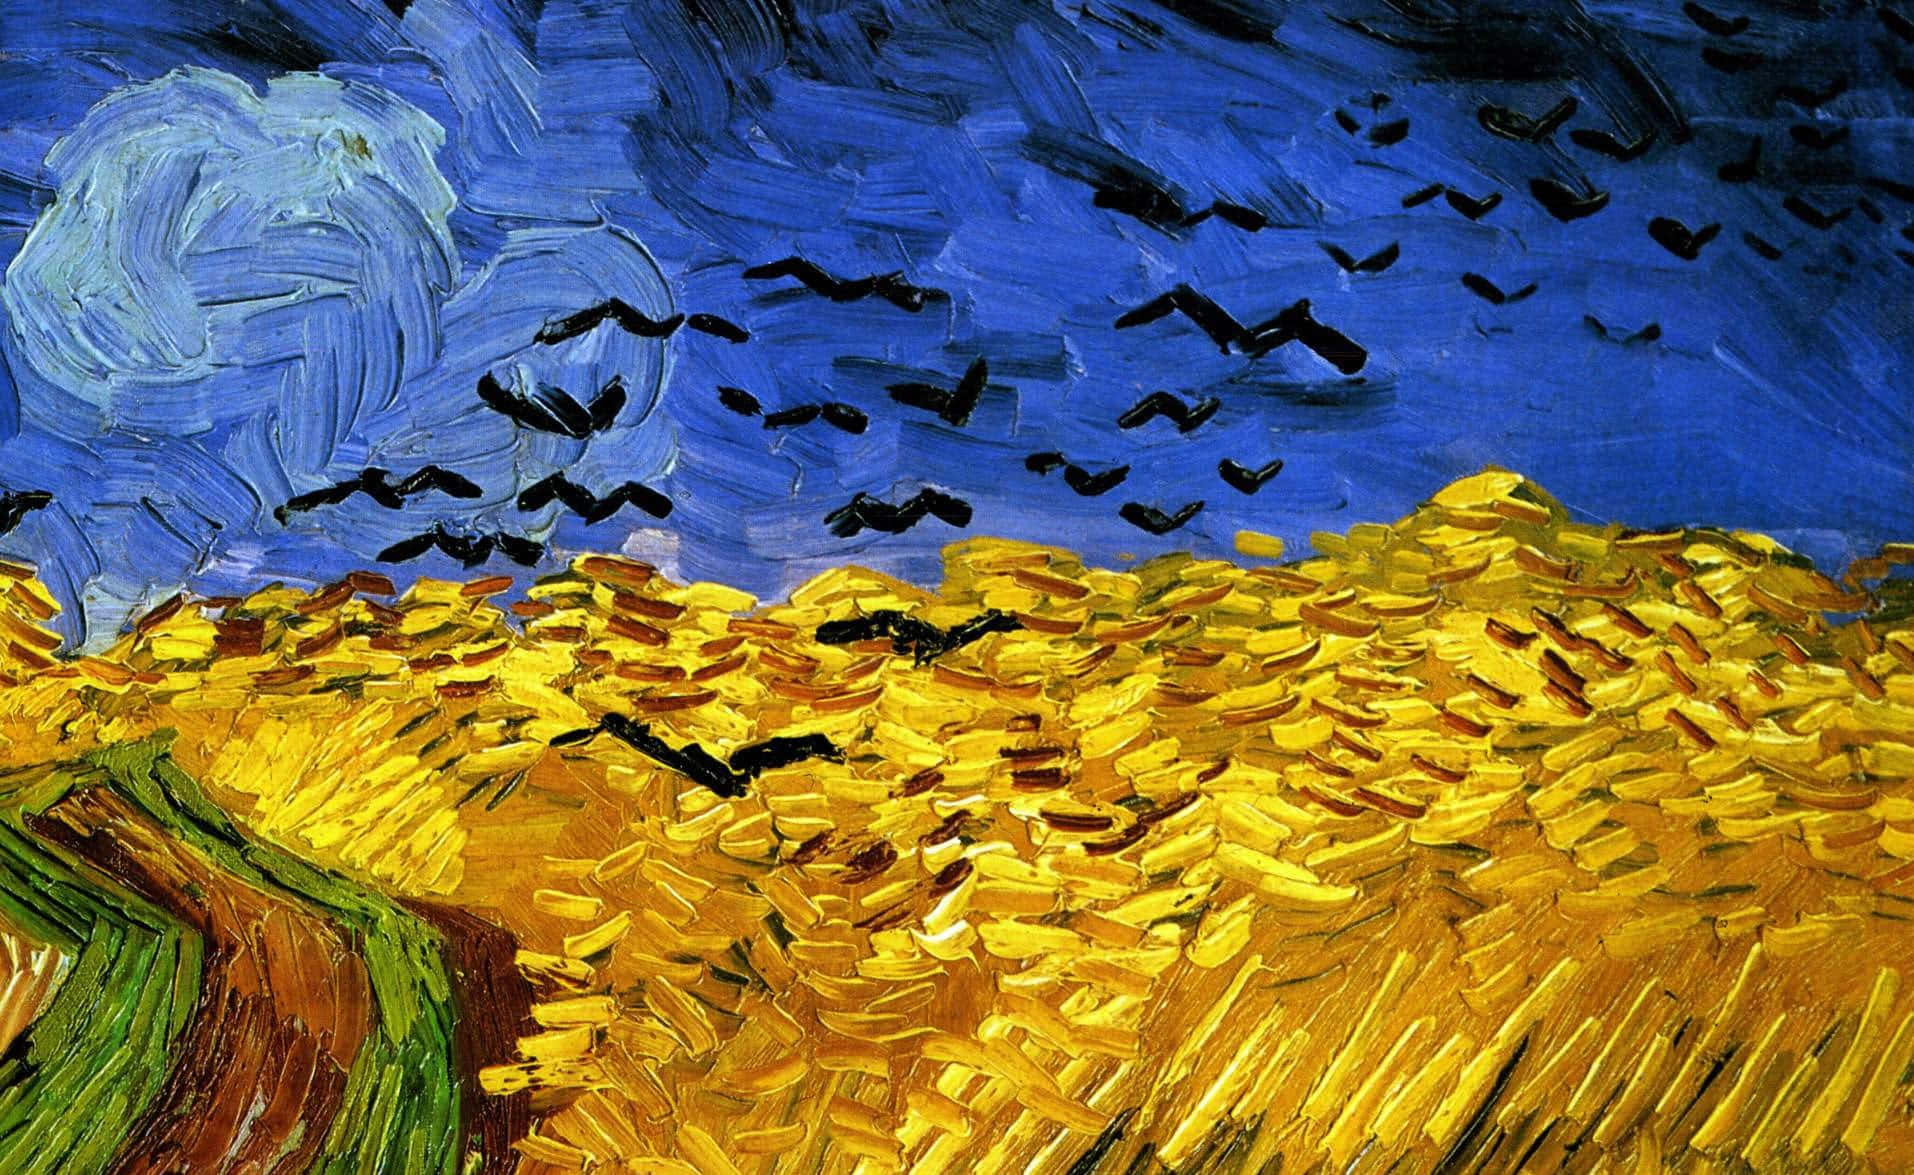 "Unable to Temporarily Escape" Post - Vincent Van Gogh, 1914